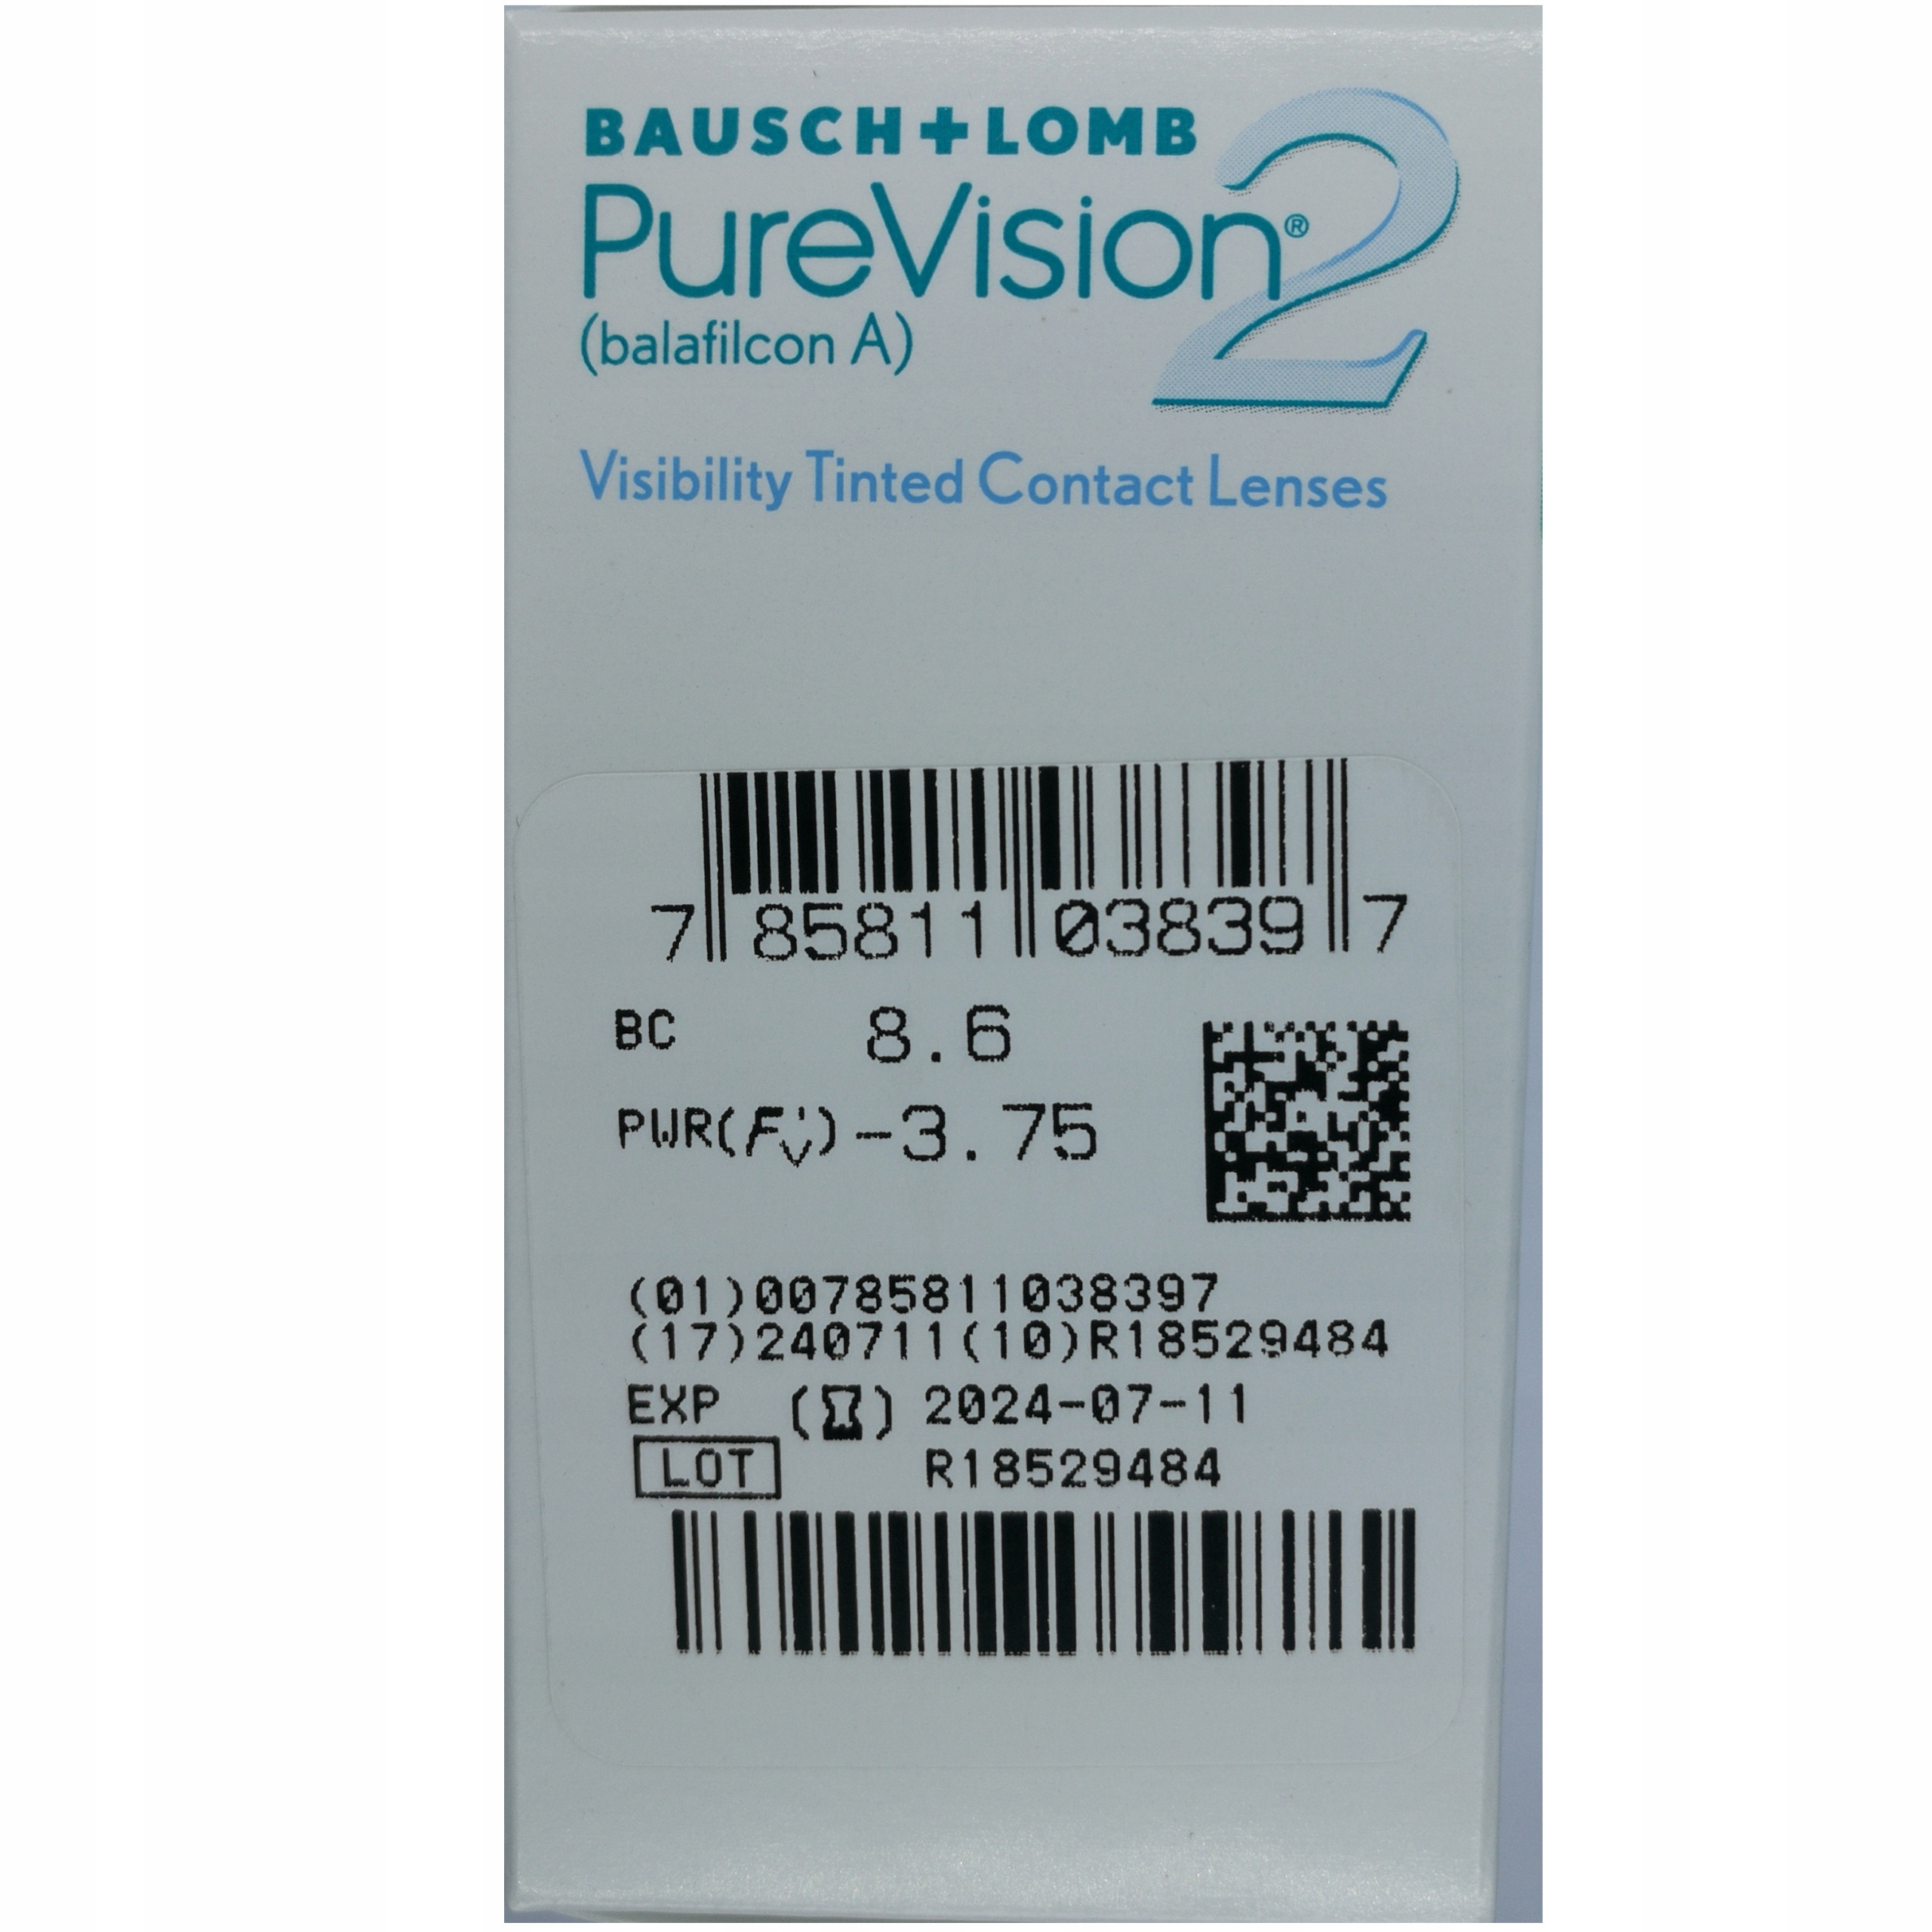 PureVision Pure Vision 2hd 6sz EAN 785811038014 ежемесячные линзы